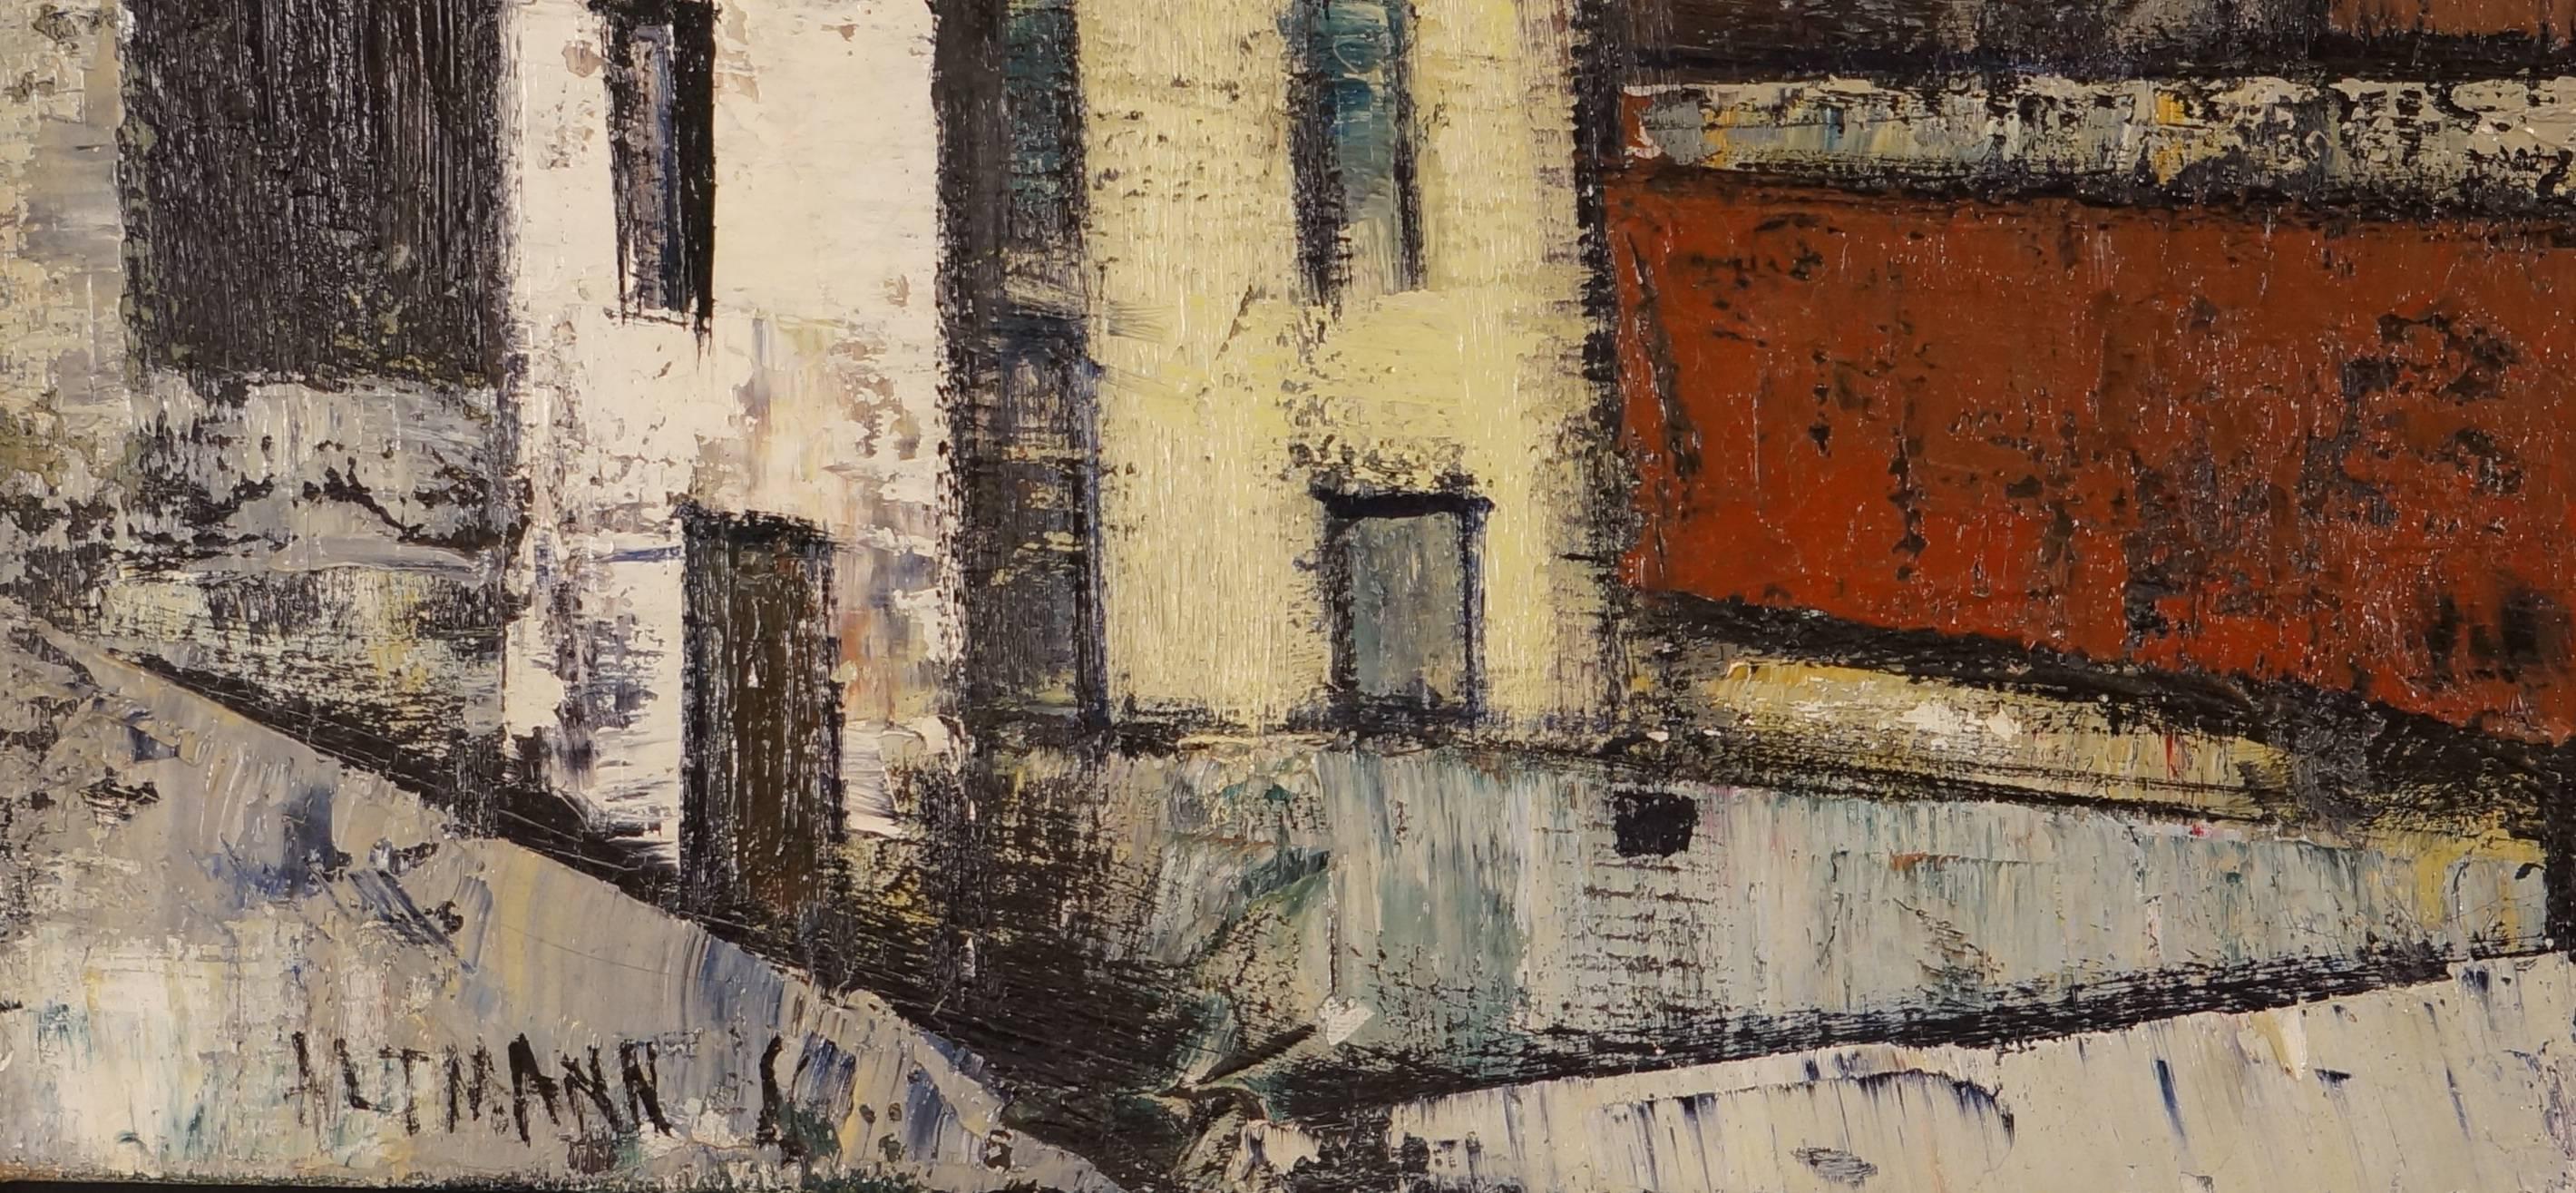 Small Town, 1950-60 - oil paint, 61x76 cm, framed - Painting by Altmann Gérard